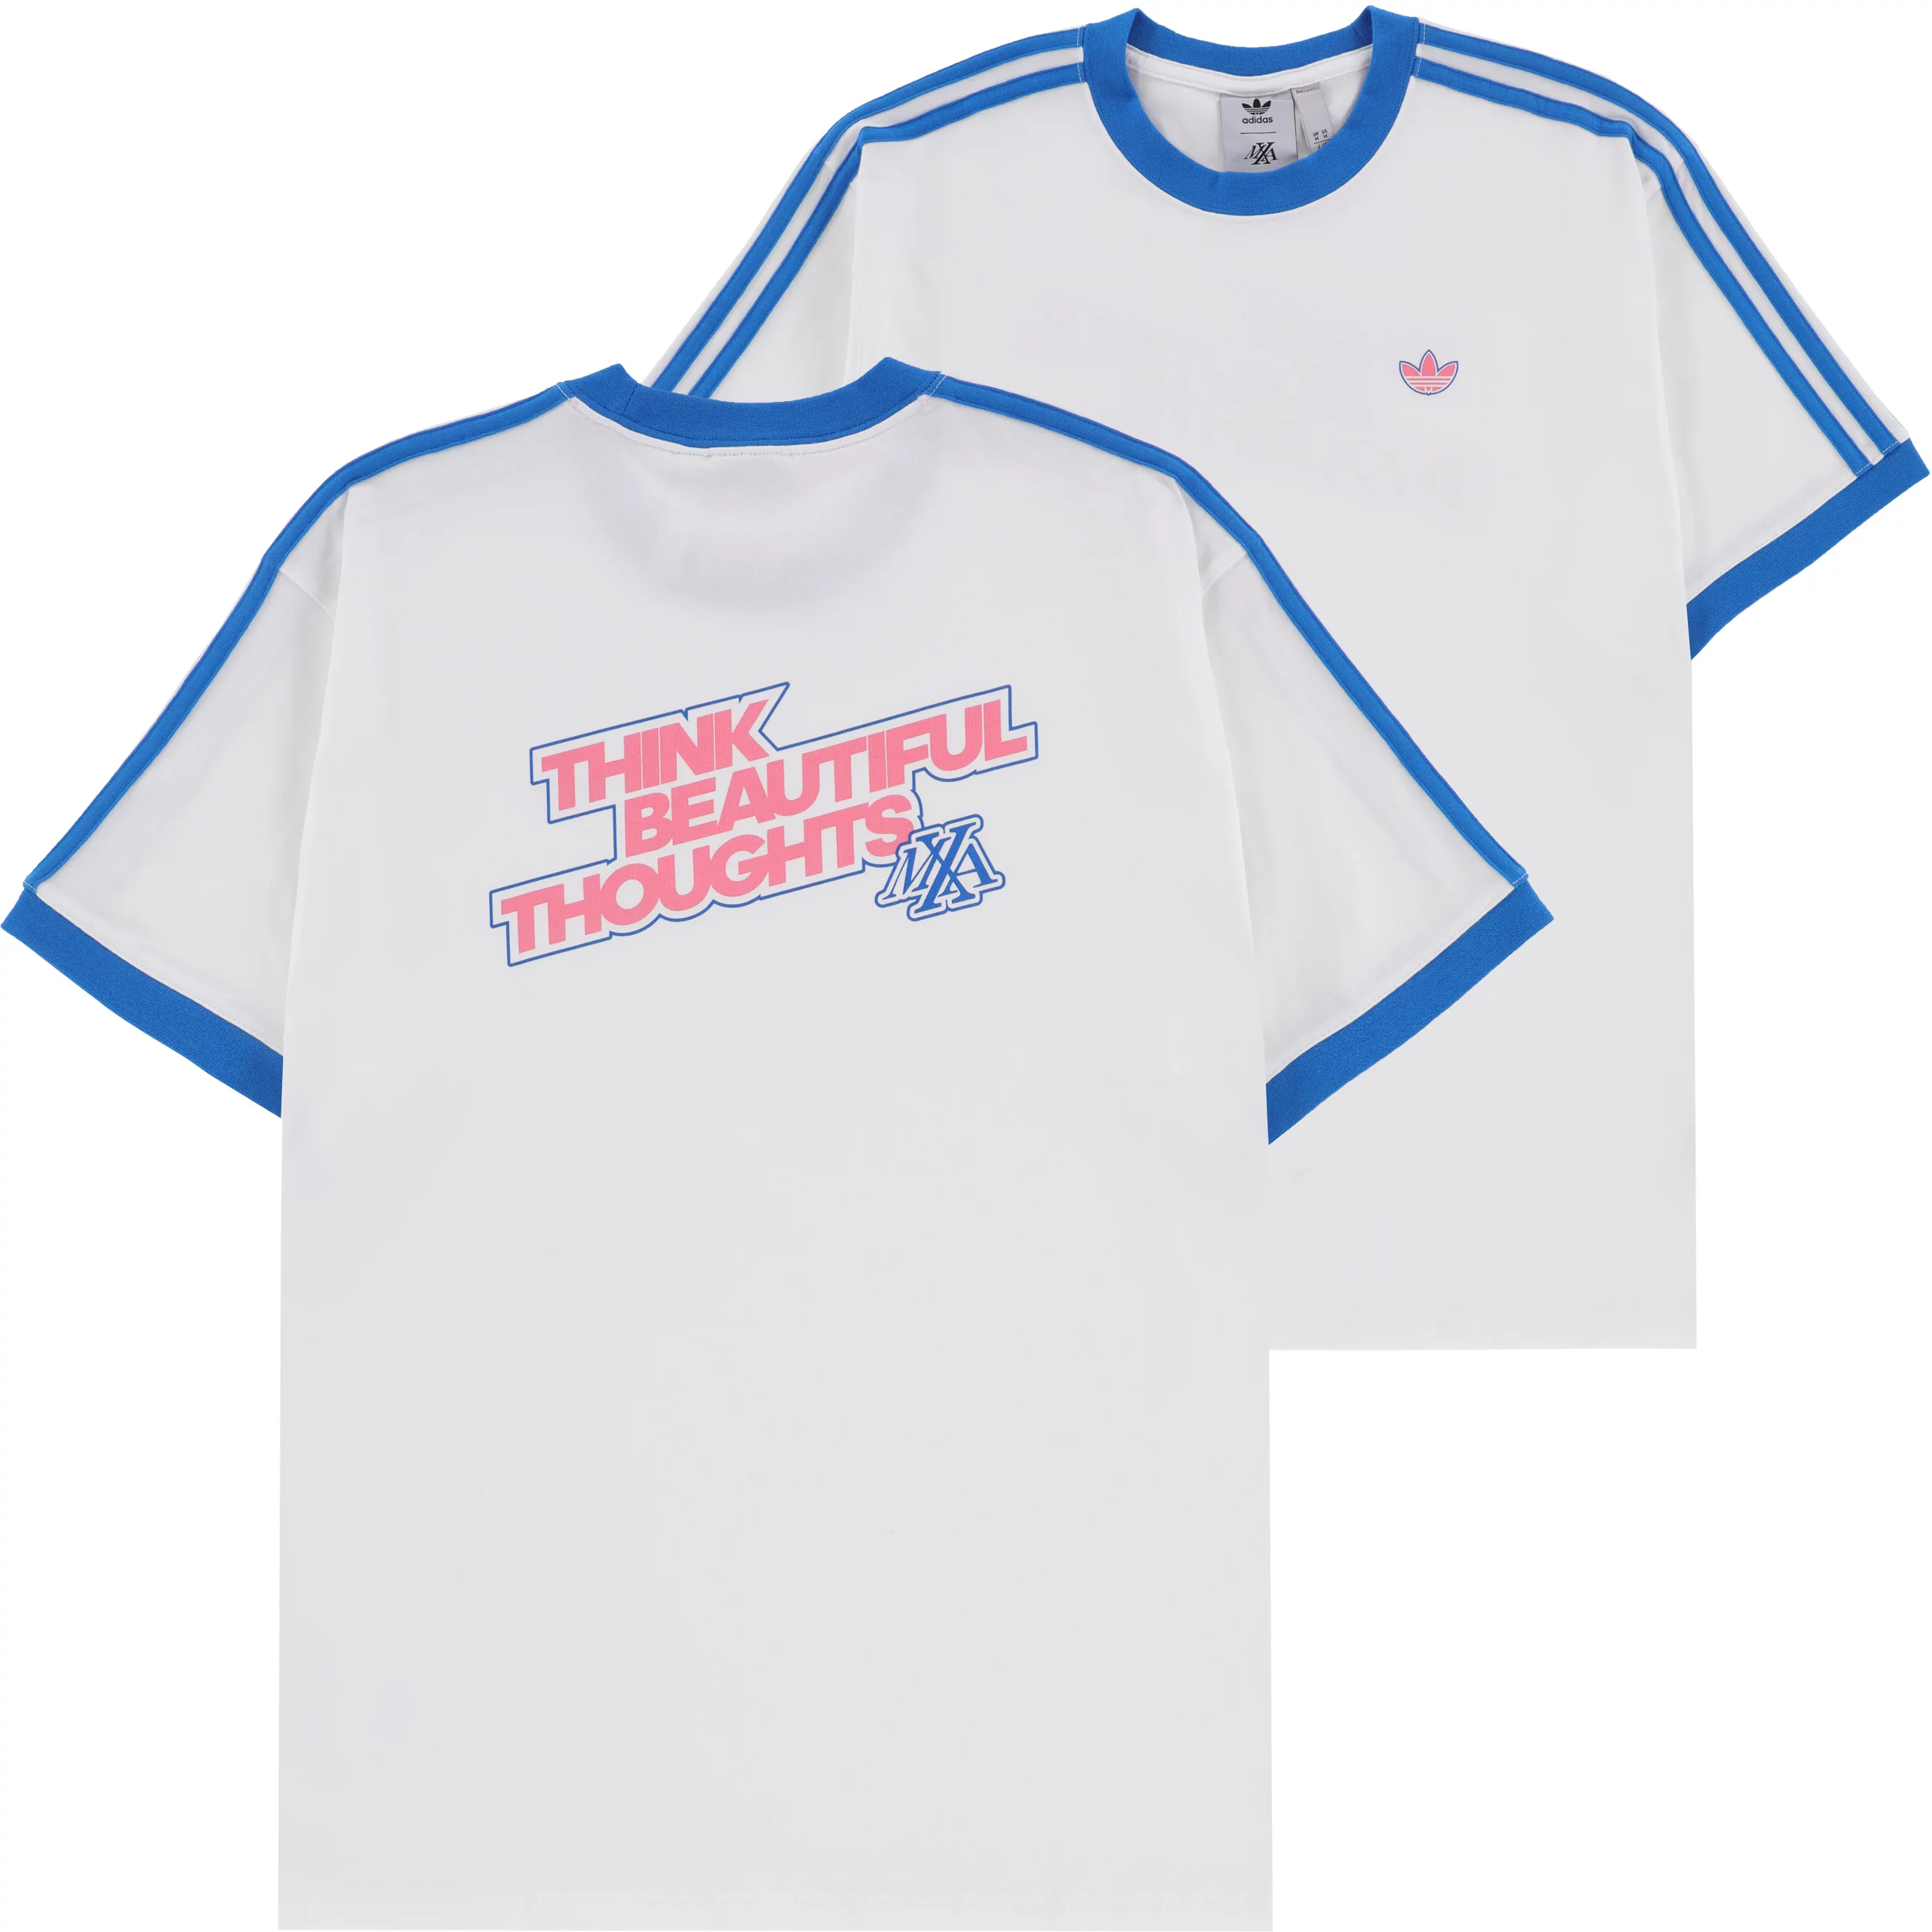 Adidas Maxallure Ringer Tactics pink Jersey bird/bliss white/blue - 